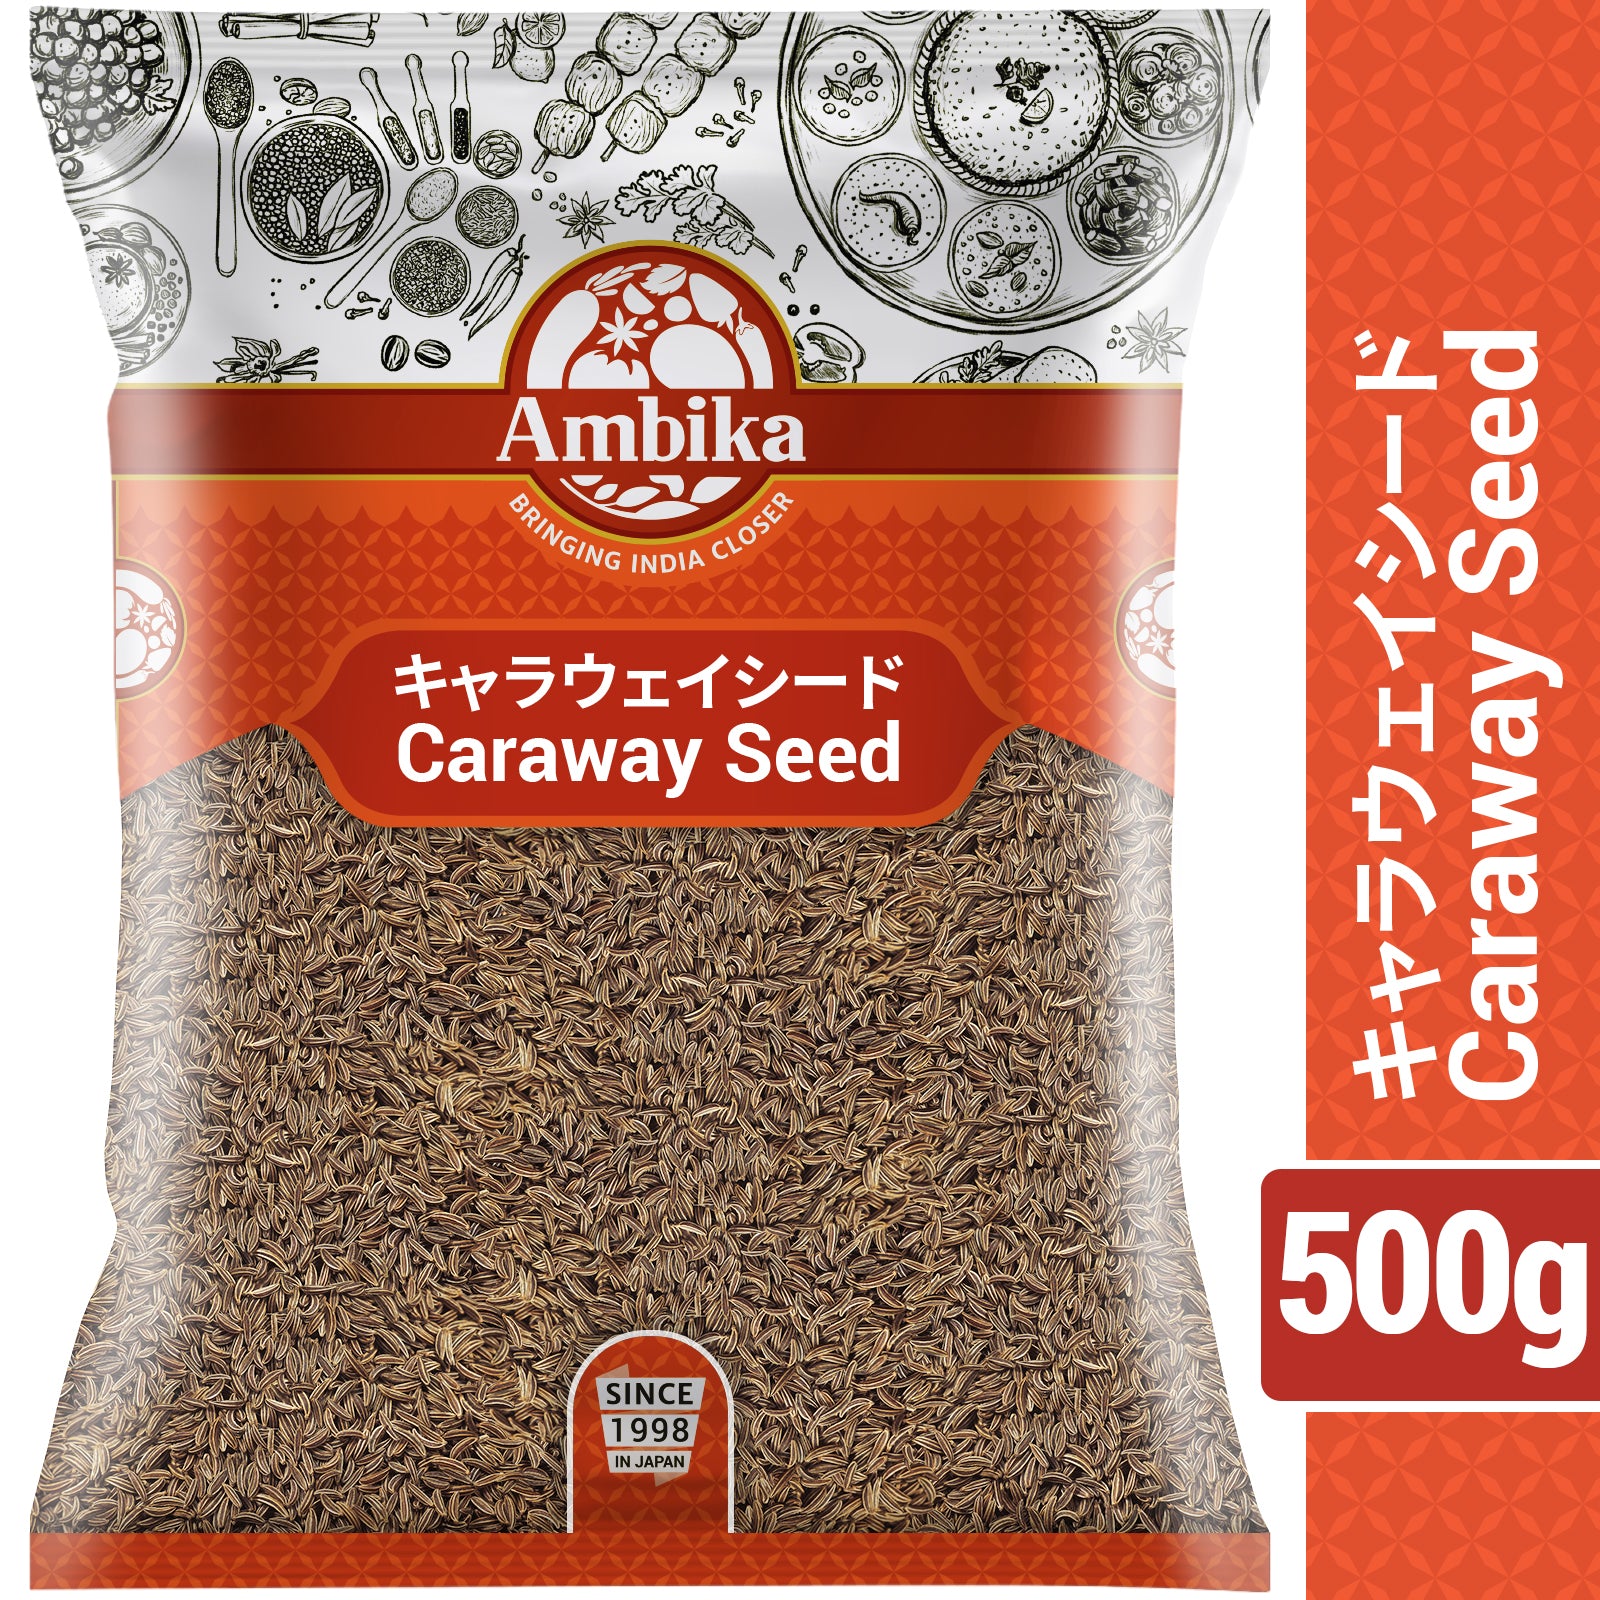 (Ambika) Caraway Seed 500g